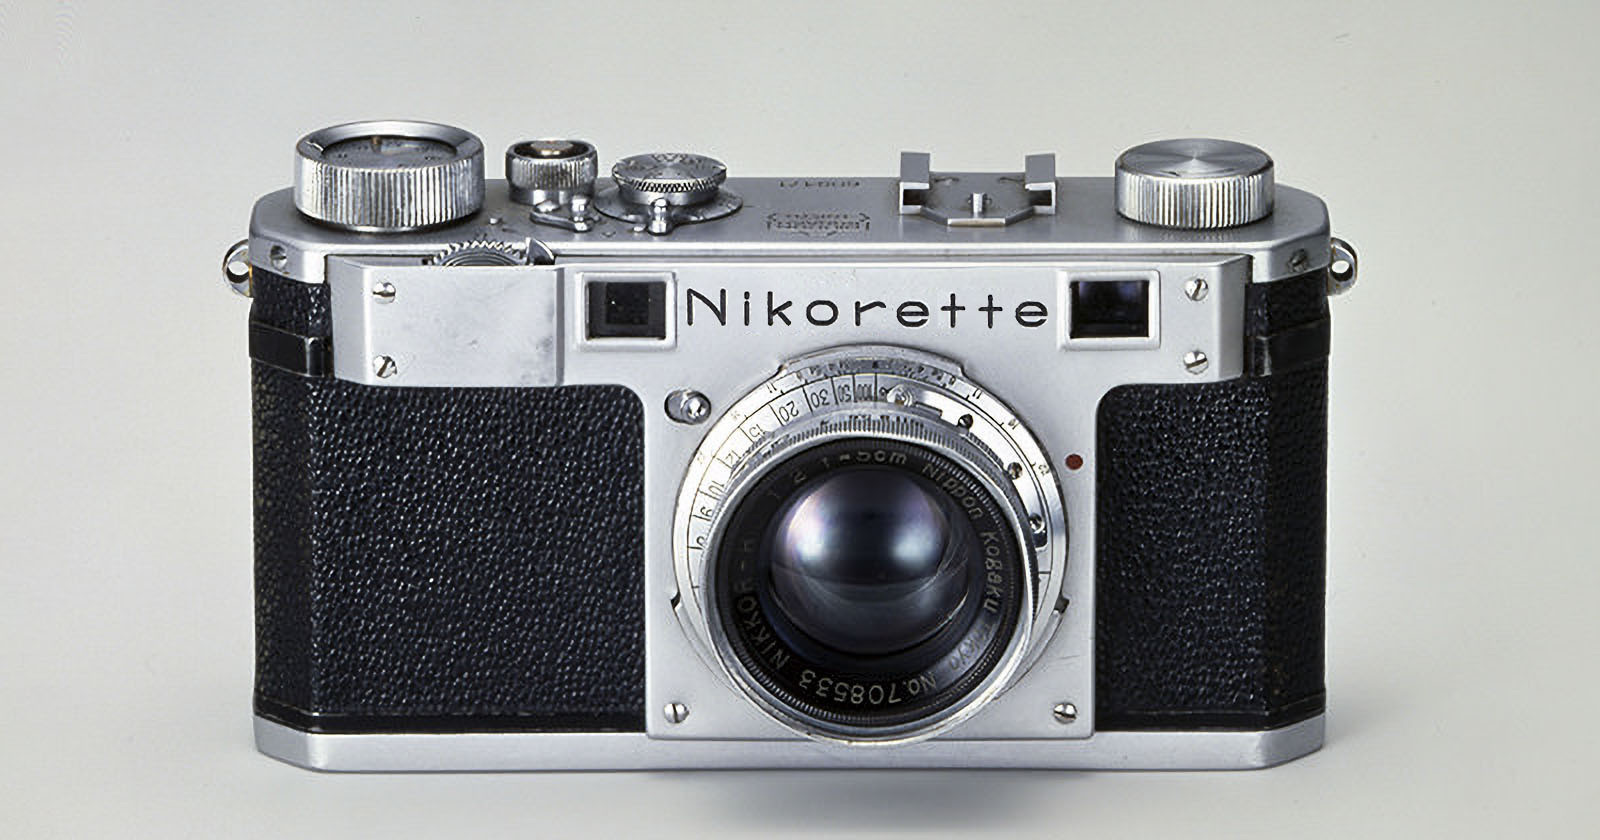 Nikon Was Almost Named Nikorette